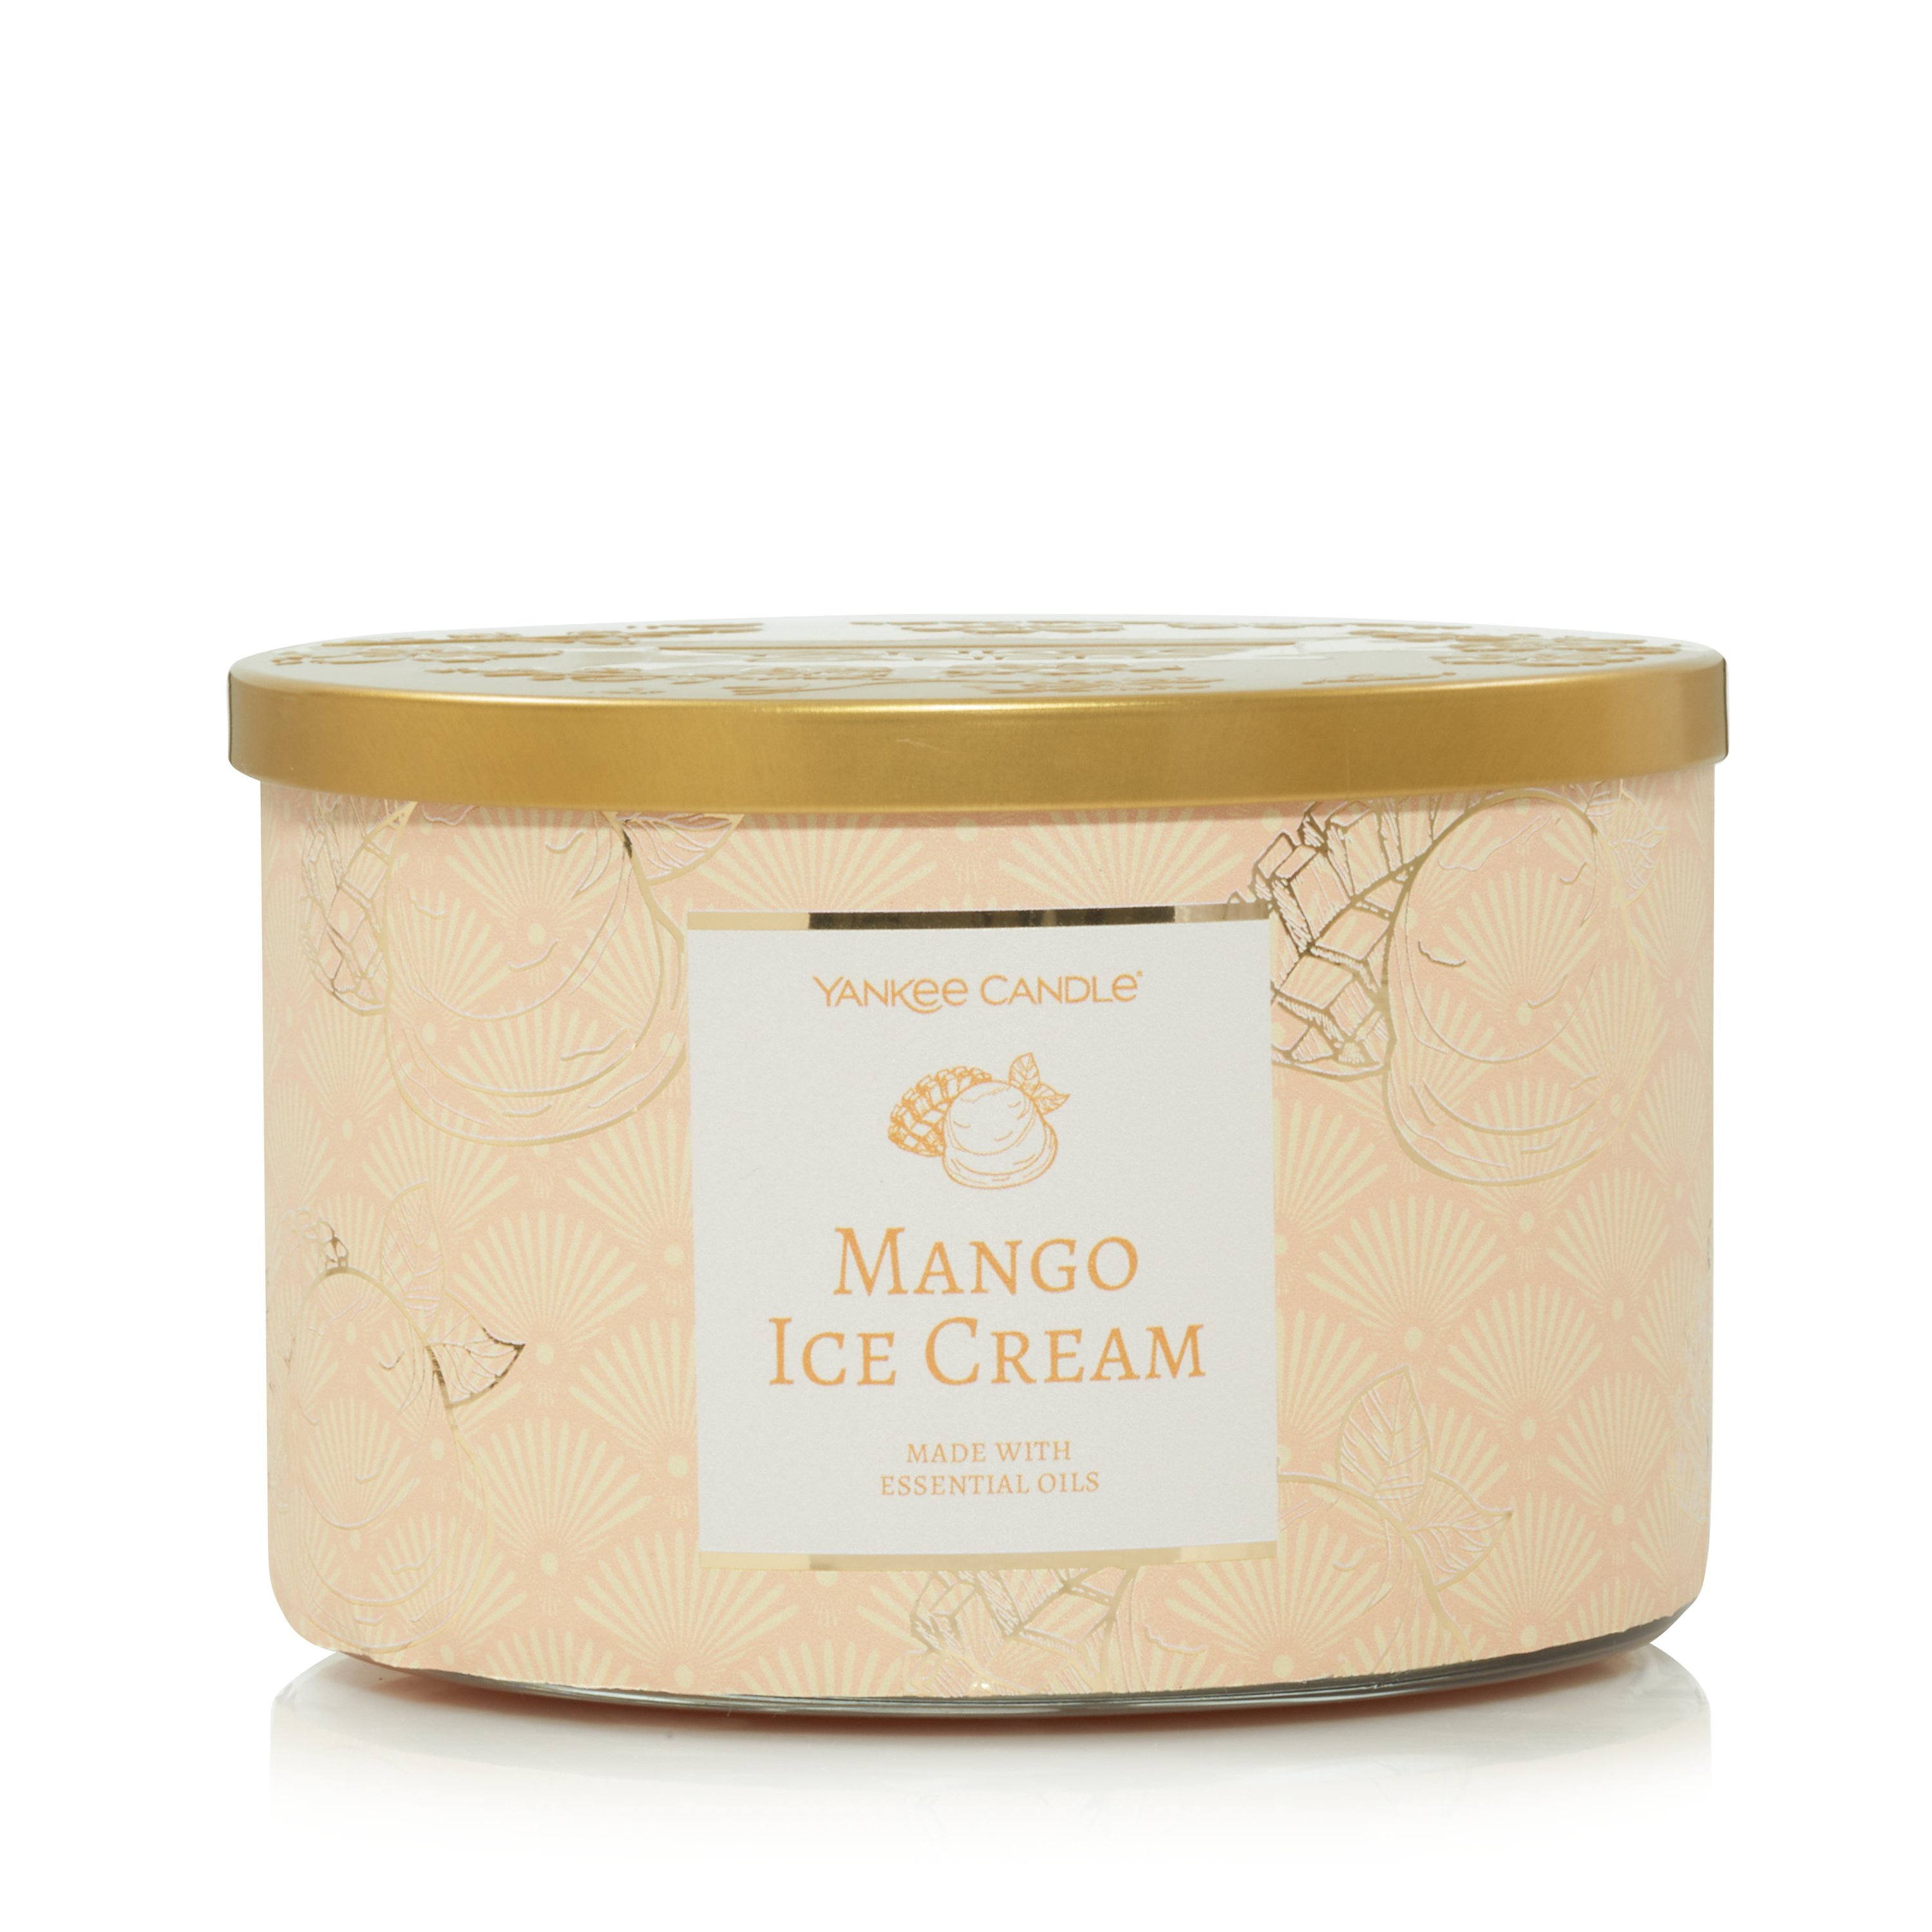 Yankee Candle Mango Ice Cream Pacco regalo candela profumata 3 x 37 g